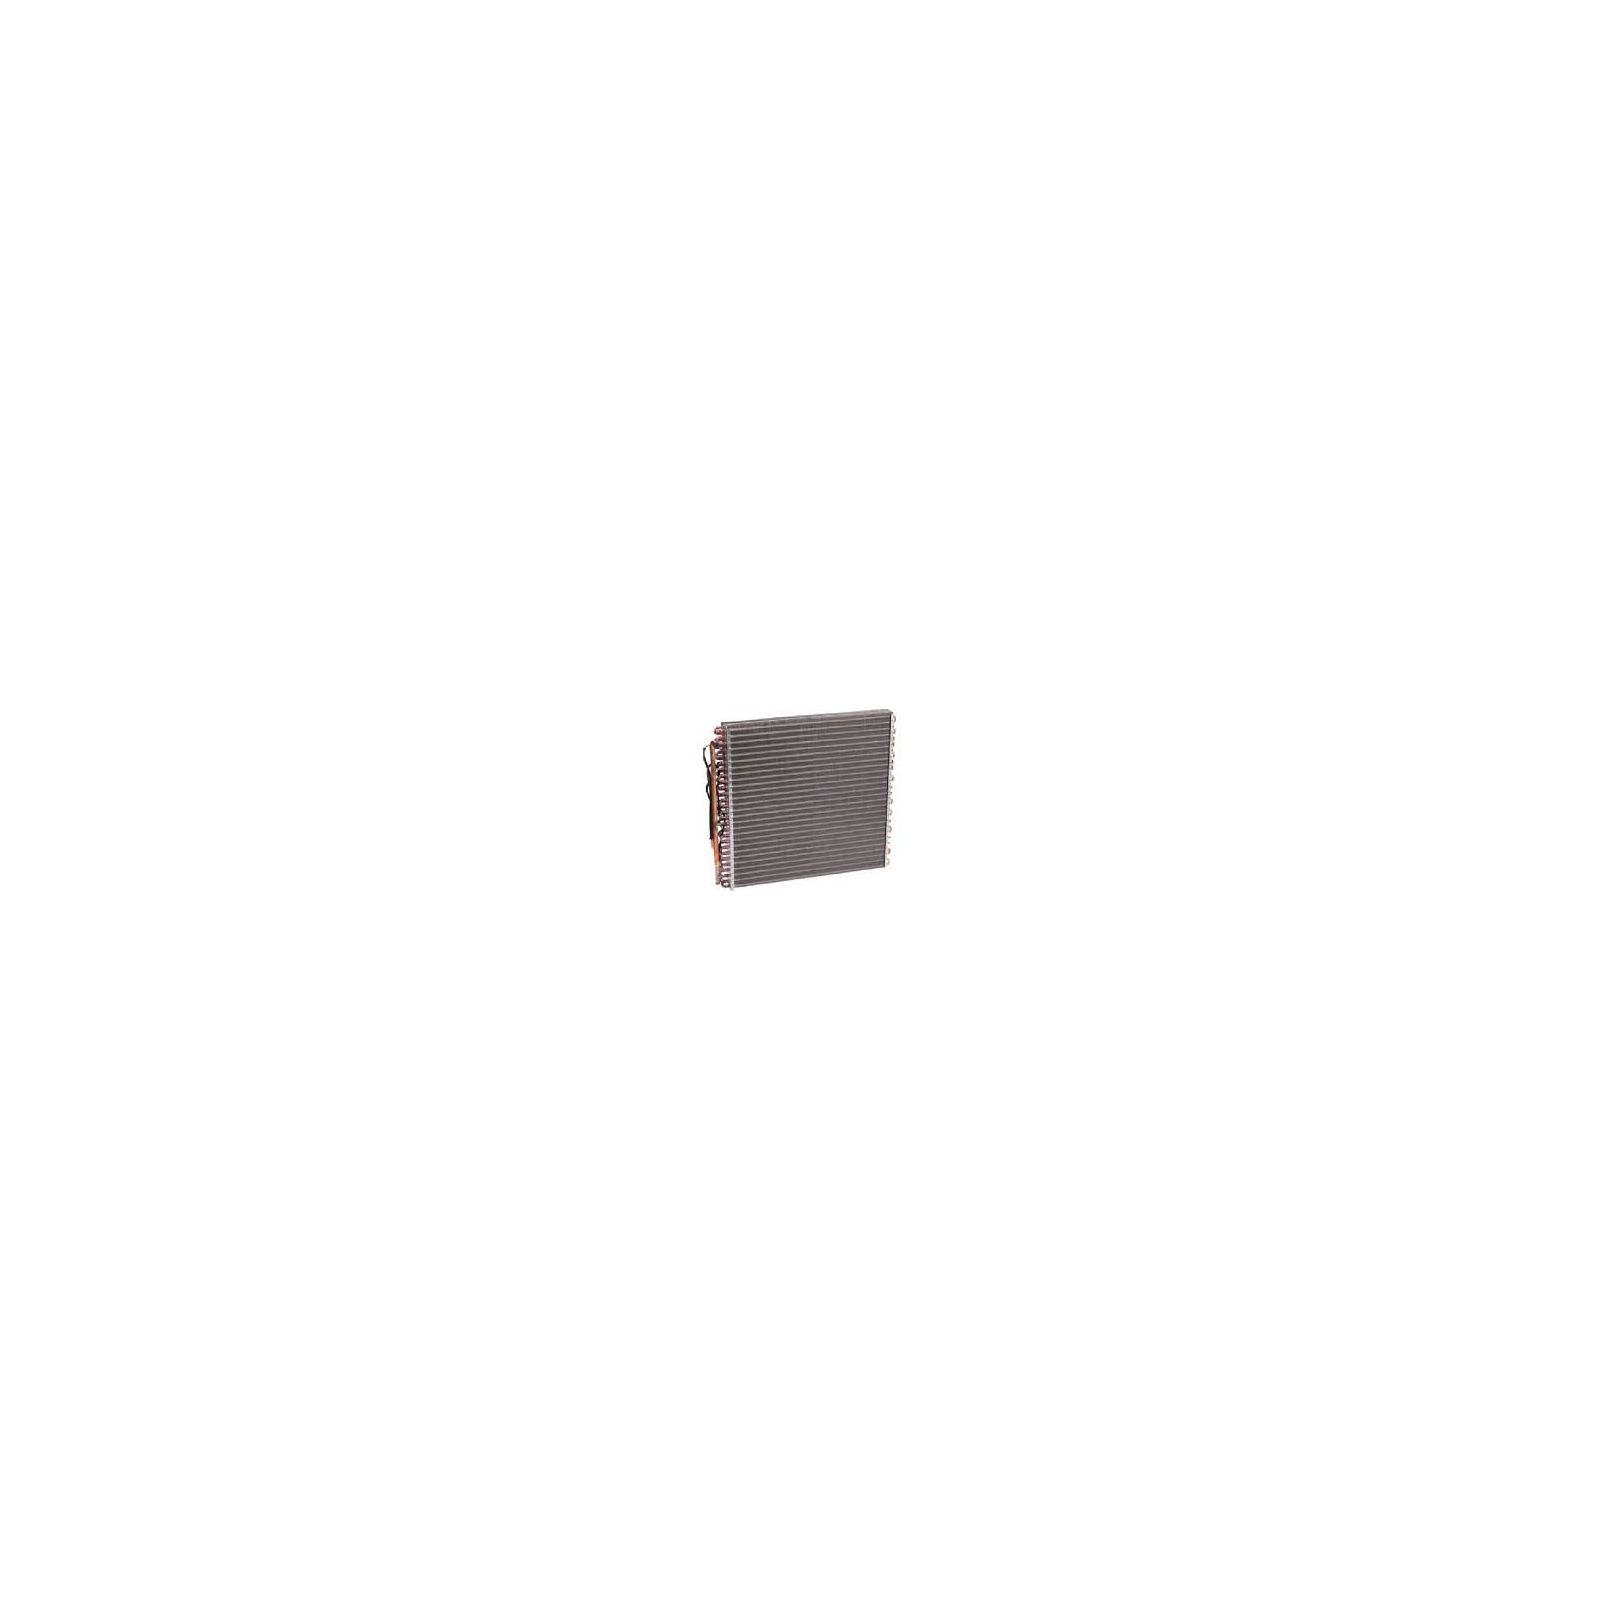 Nortek D03635R - Indoor Coil - Q3RC-036K/GQ3RC-036K/PPH1RC036K Packaged Heat Pump